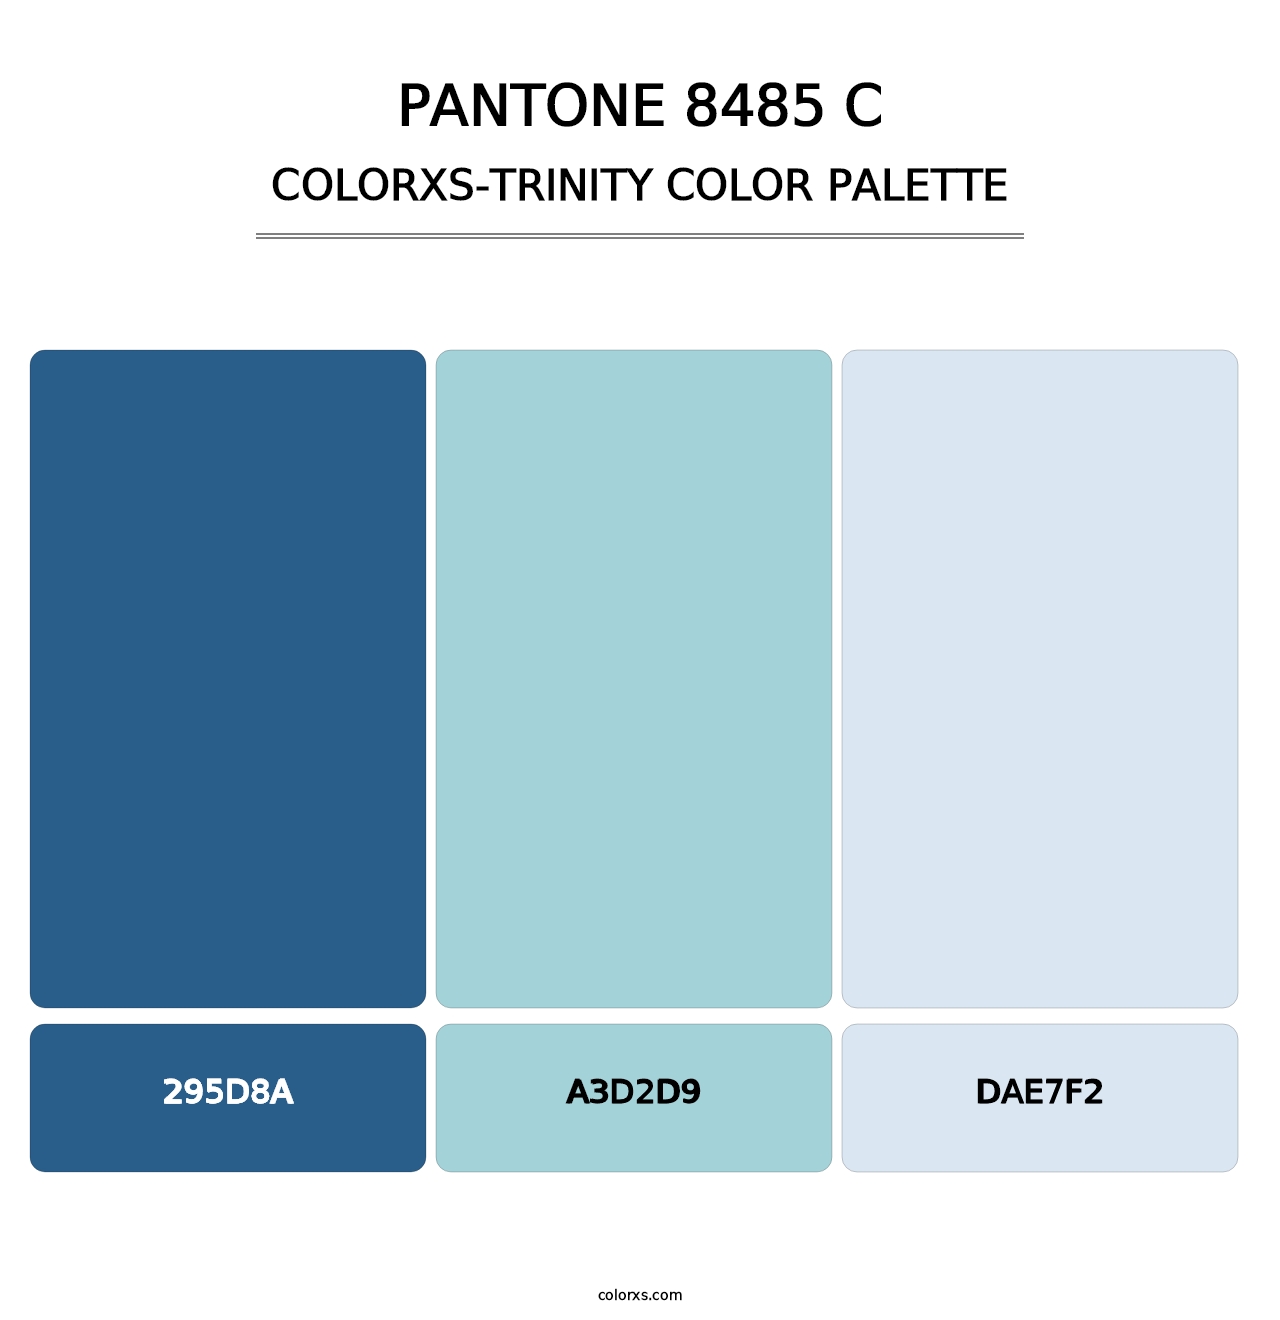 PANTONE 8485 C - Colorxs Trinity Palette